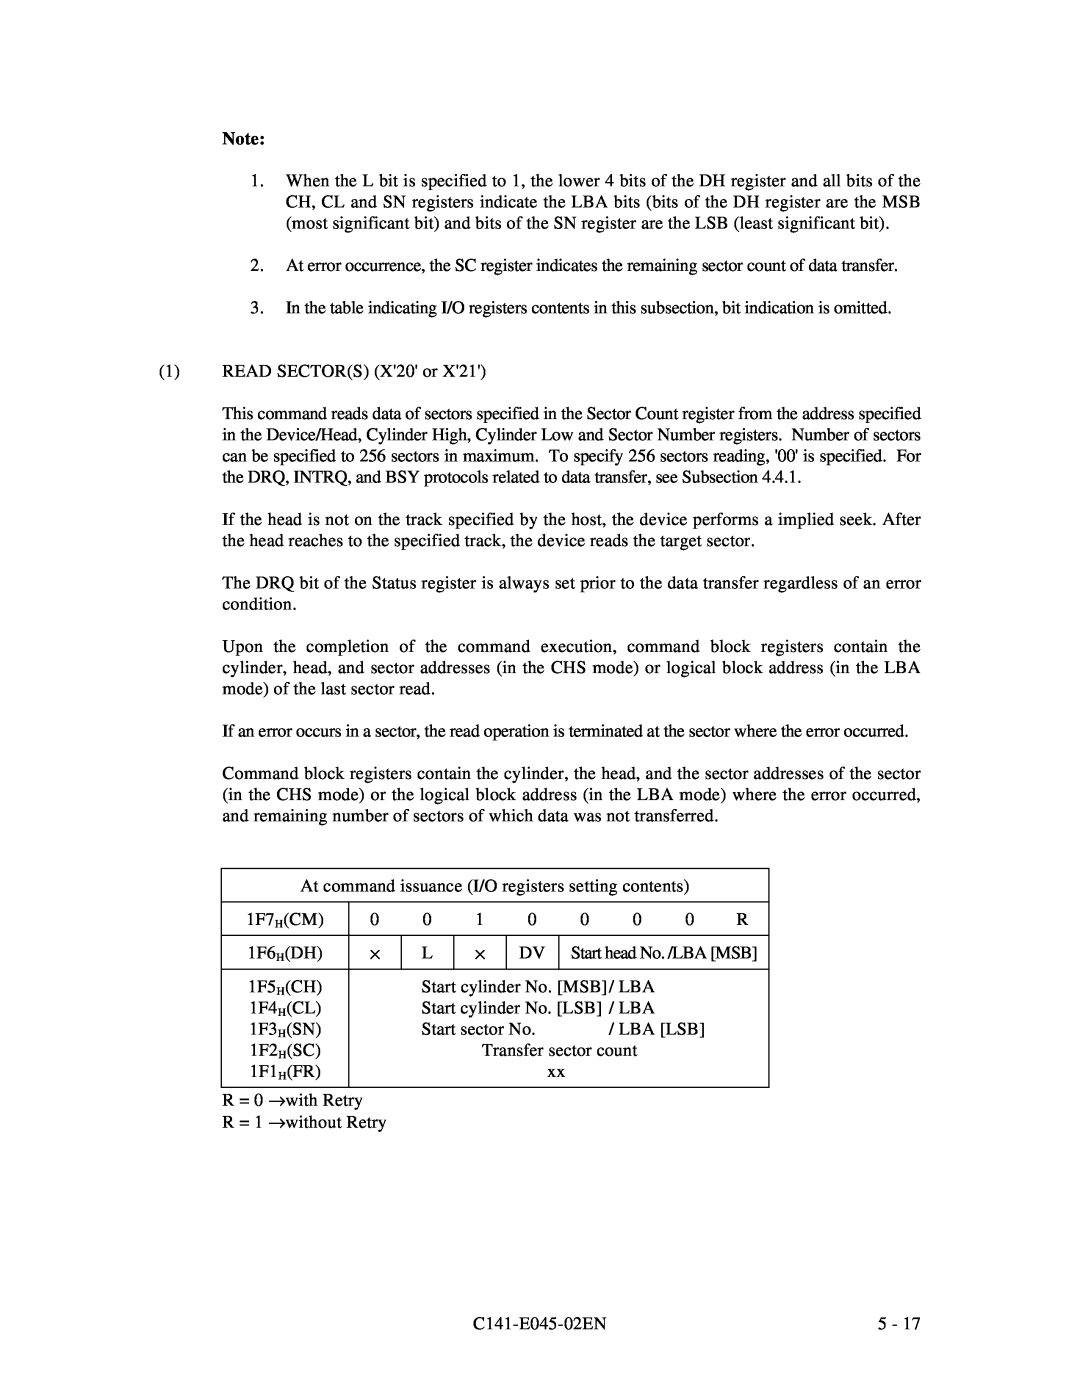 Fujitsu MPB3052AT manual READ SECTORS X20 or, At command issuance I/O registers setting contents, 1F7 HCM, 1F6 HDH, 1F5 HCH 